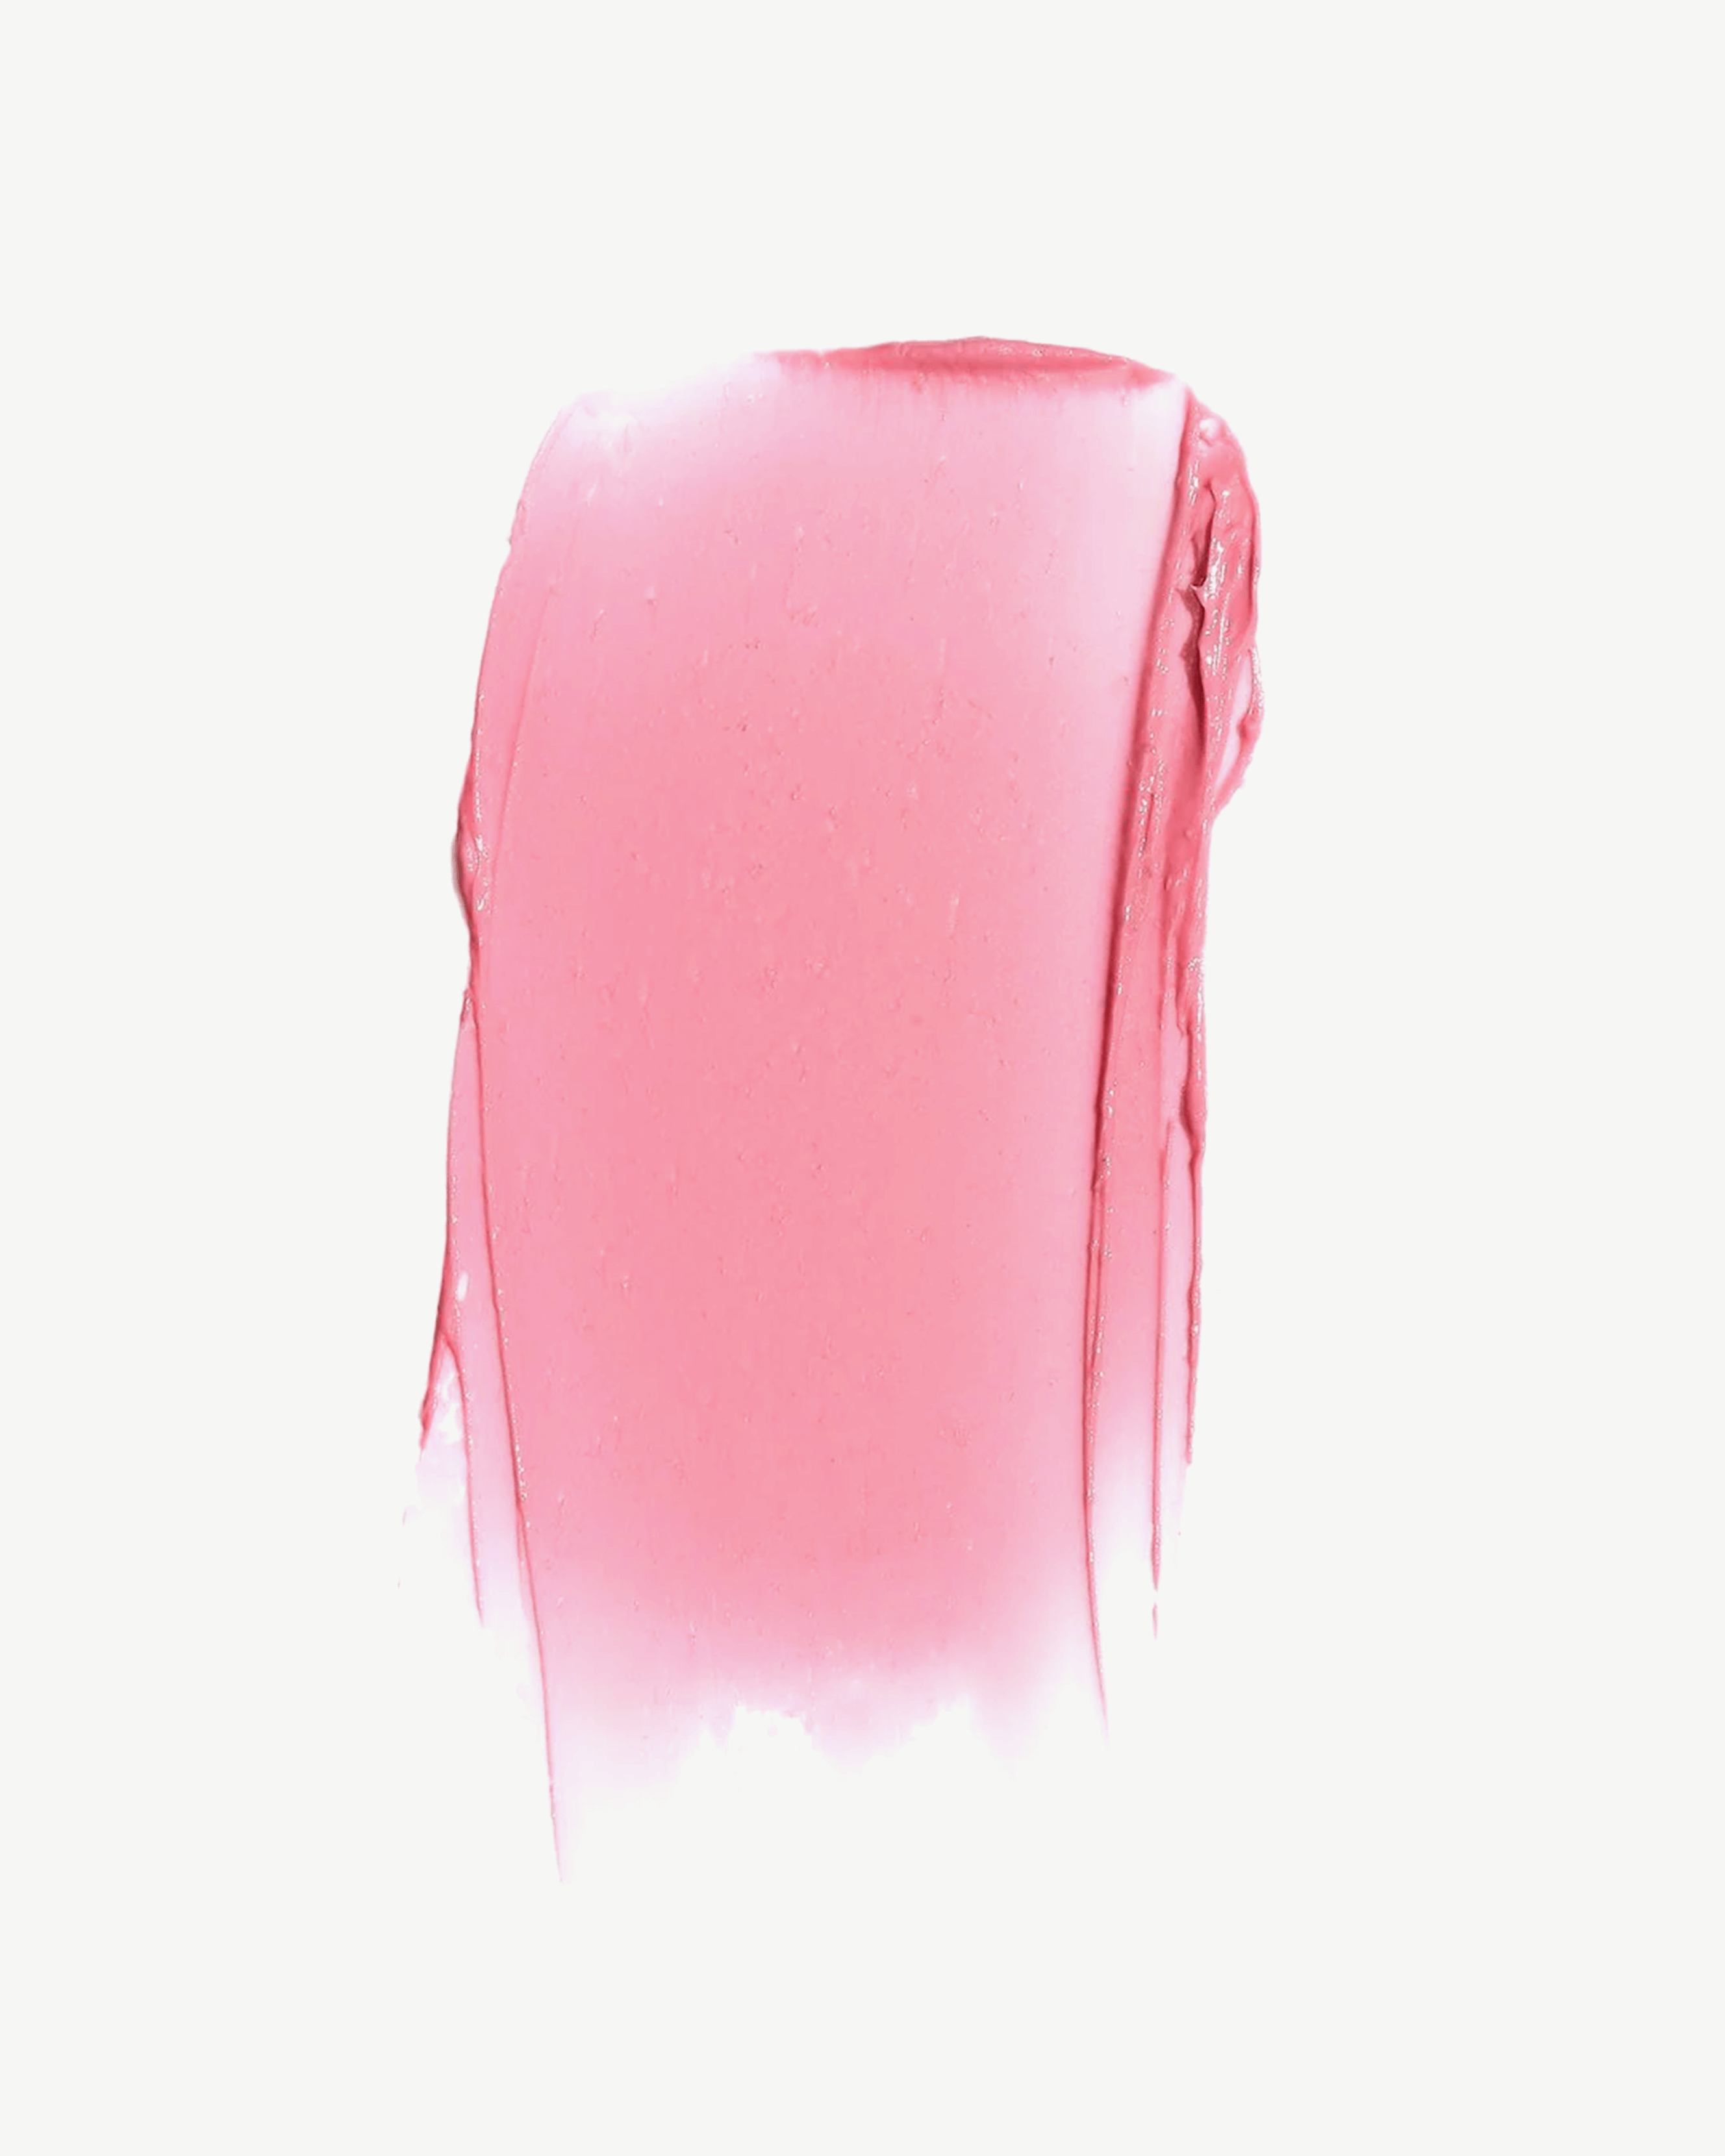 Destiny Lane (fushsia pink)